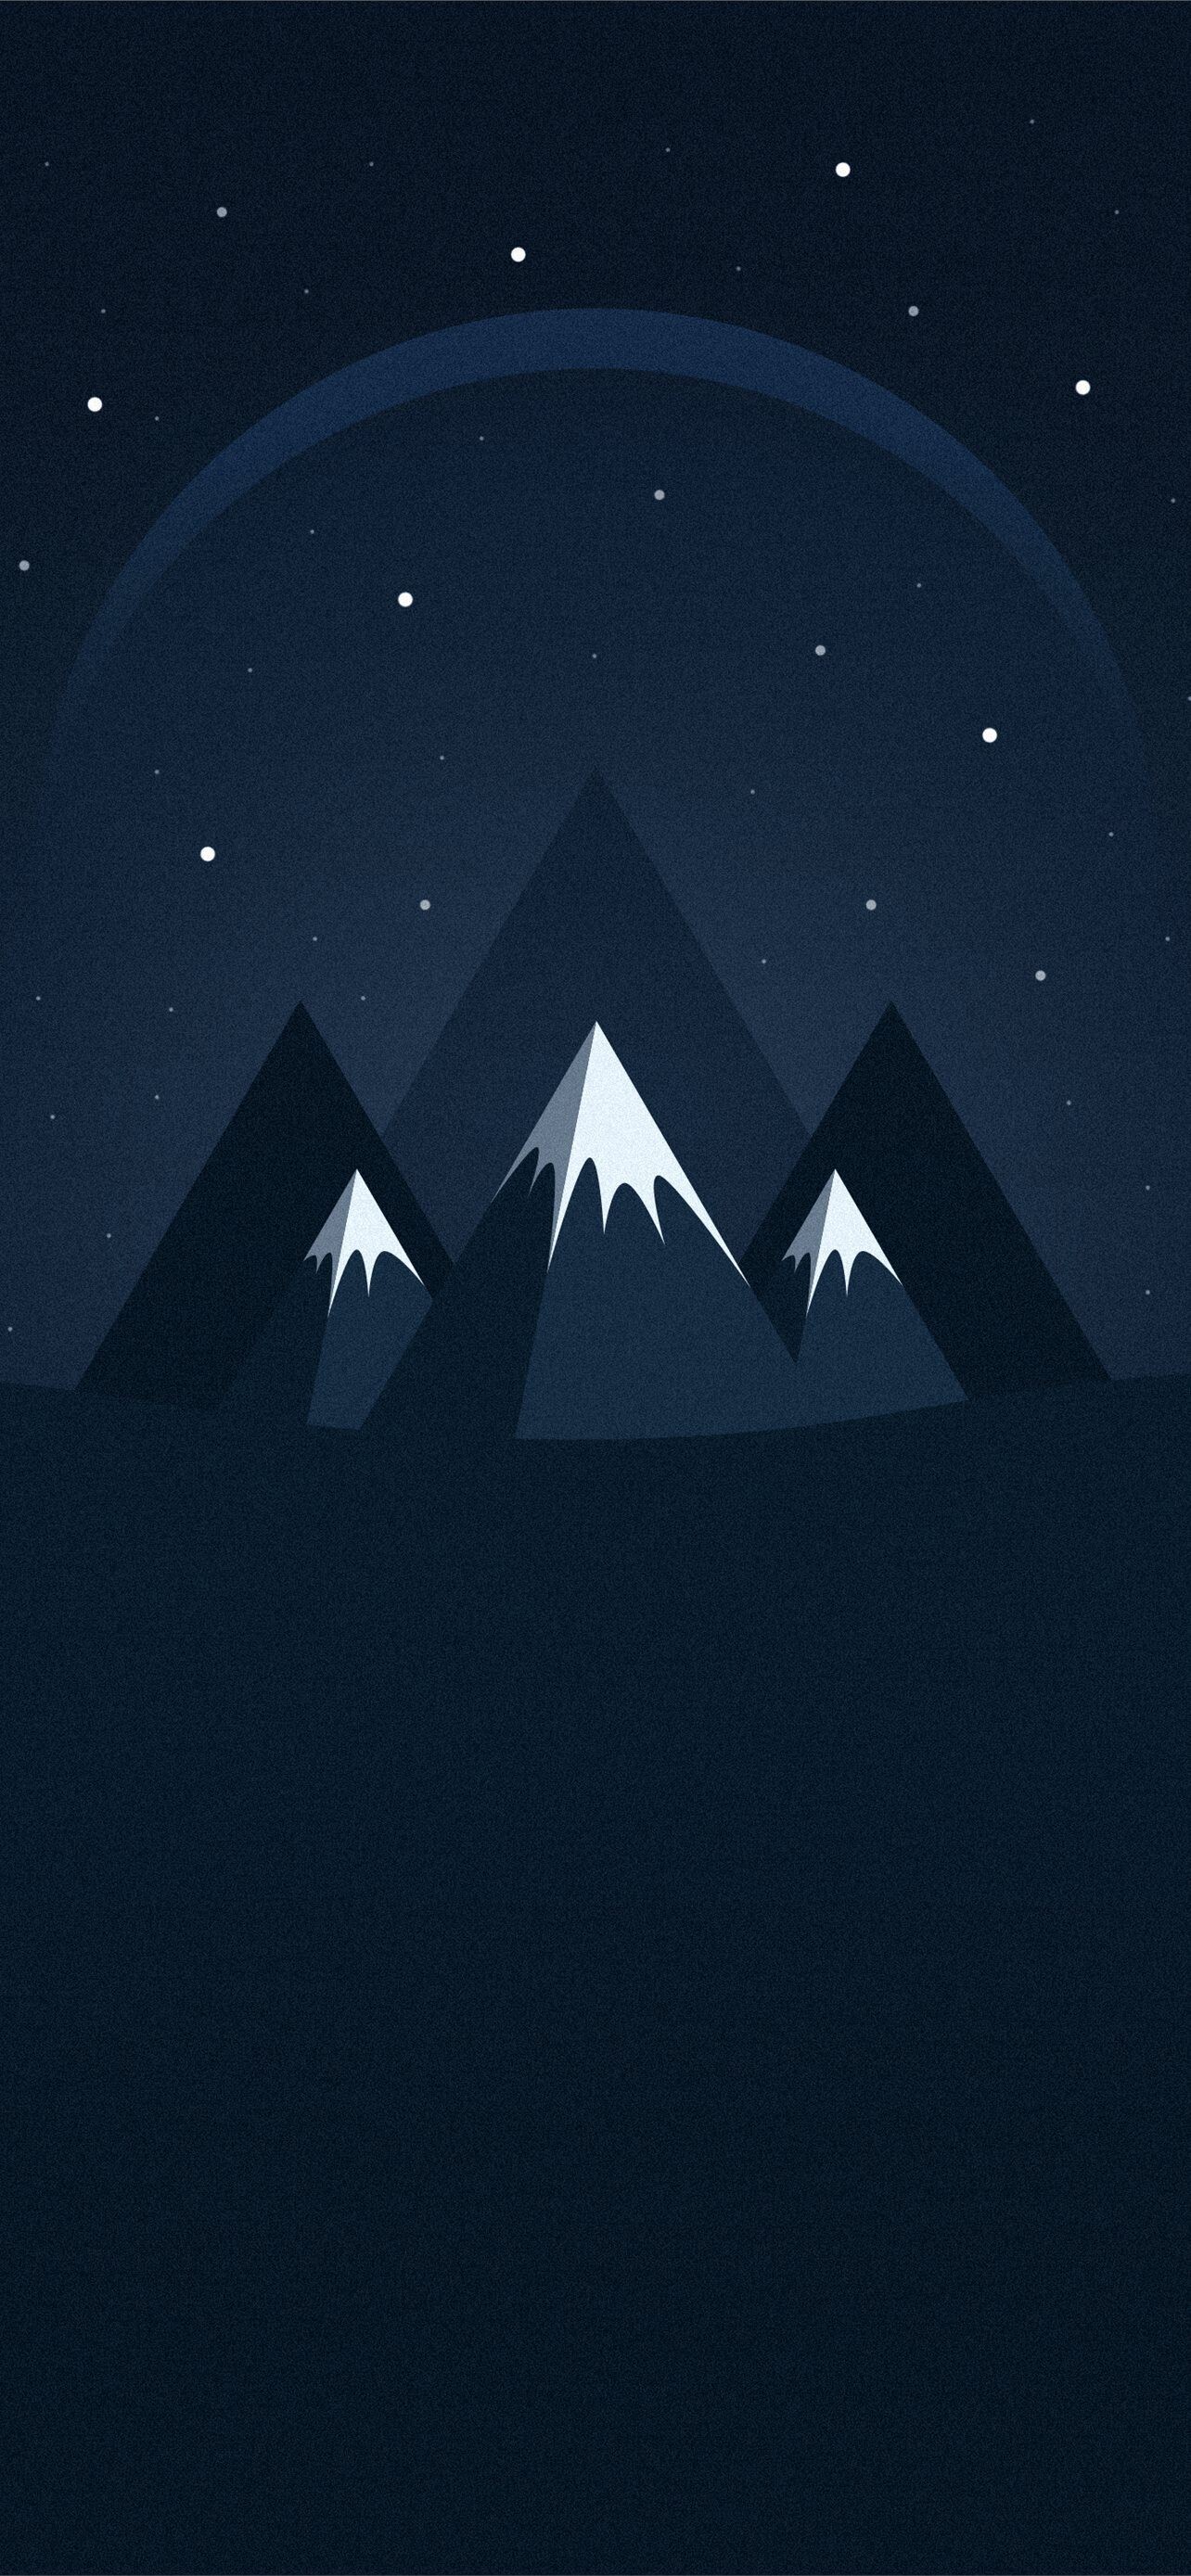 Triangle: Minimalistic mountains, Pyramids, Night sky. 1290x2780 HD Wallpaper.